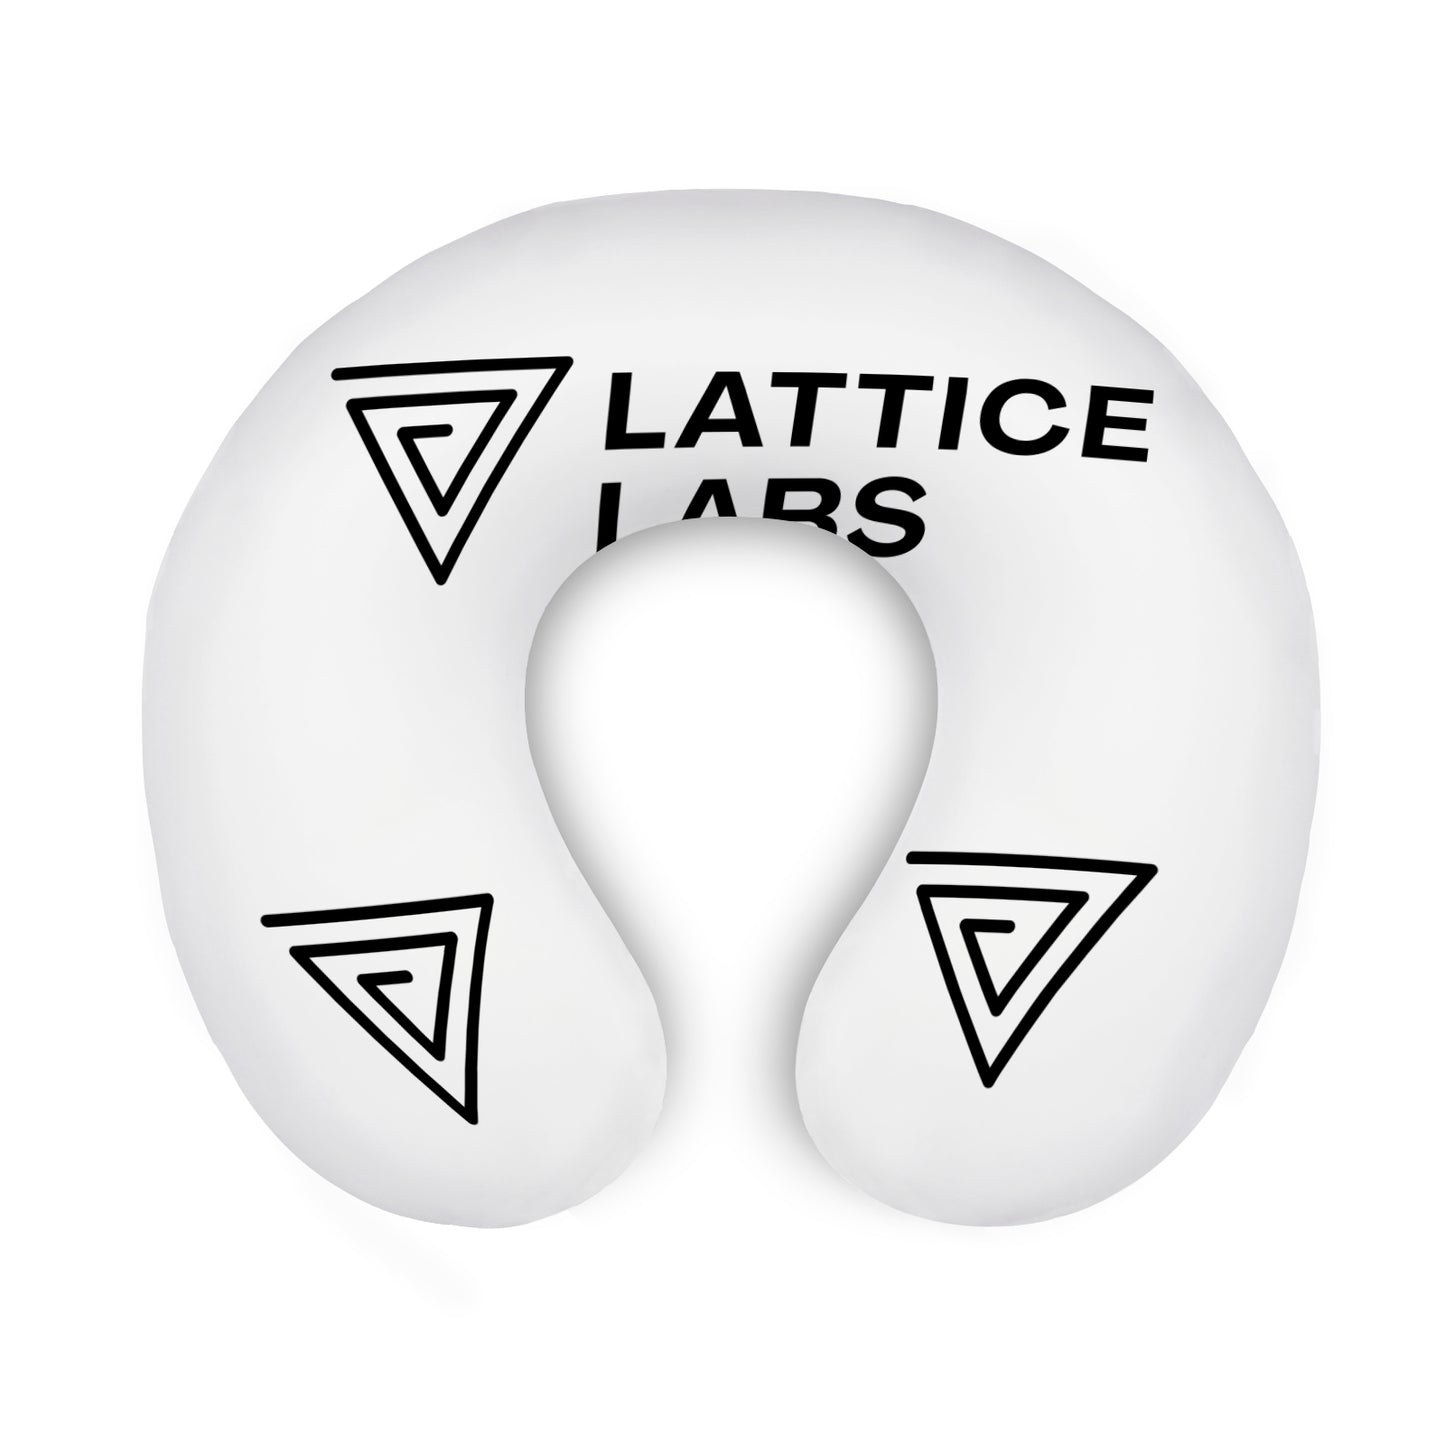 Lattice Labs U-Shaped Travel Neck Pillow